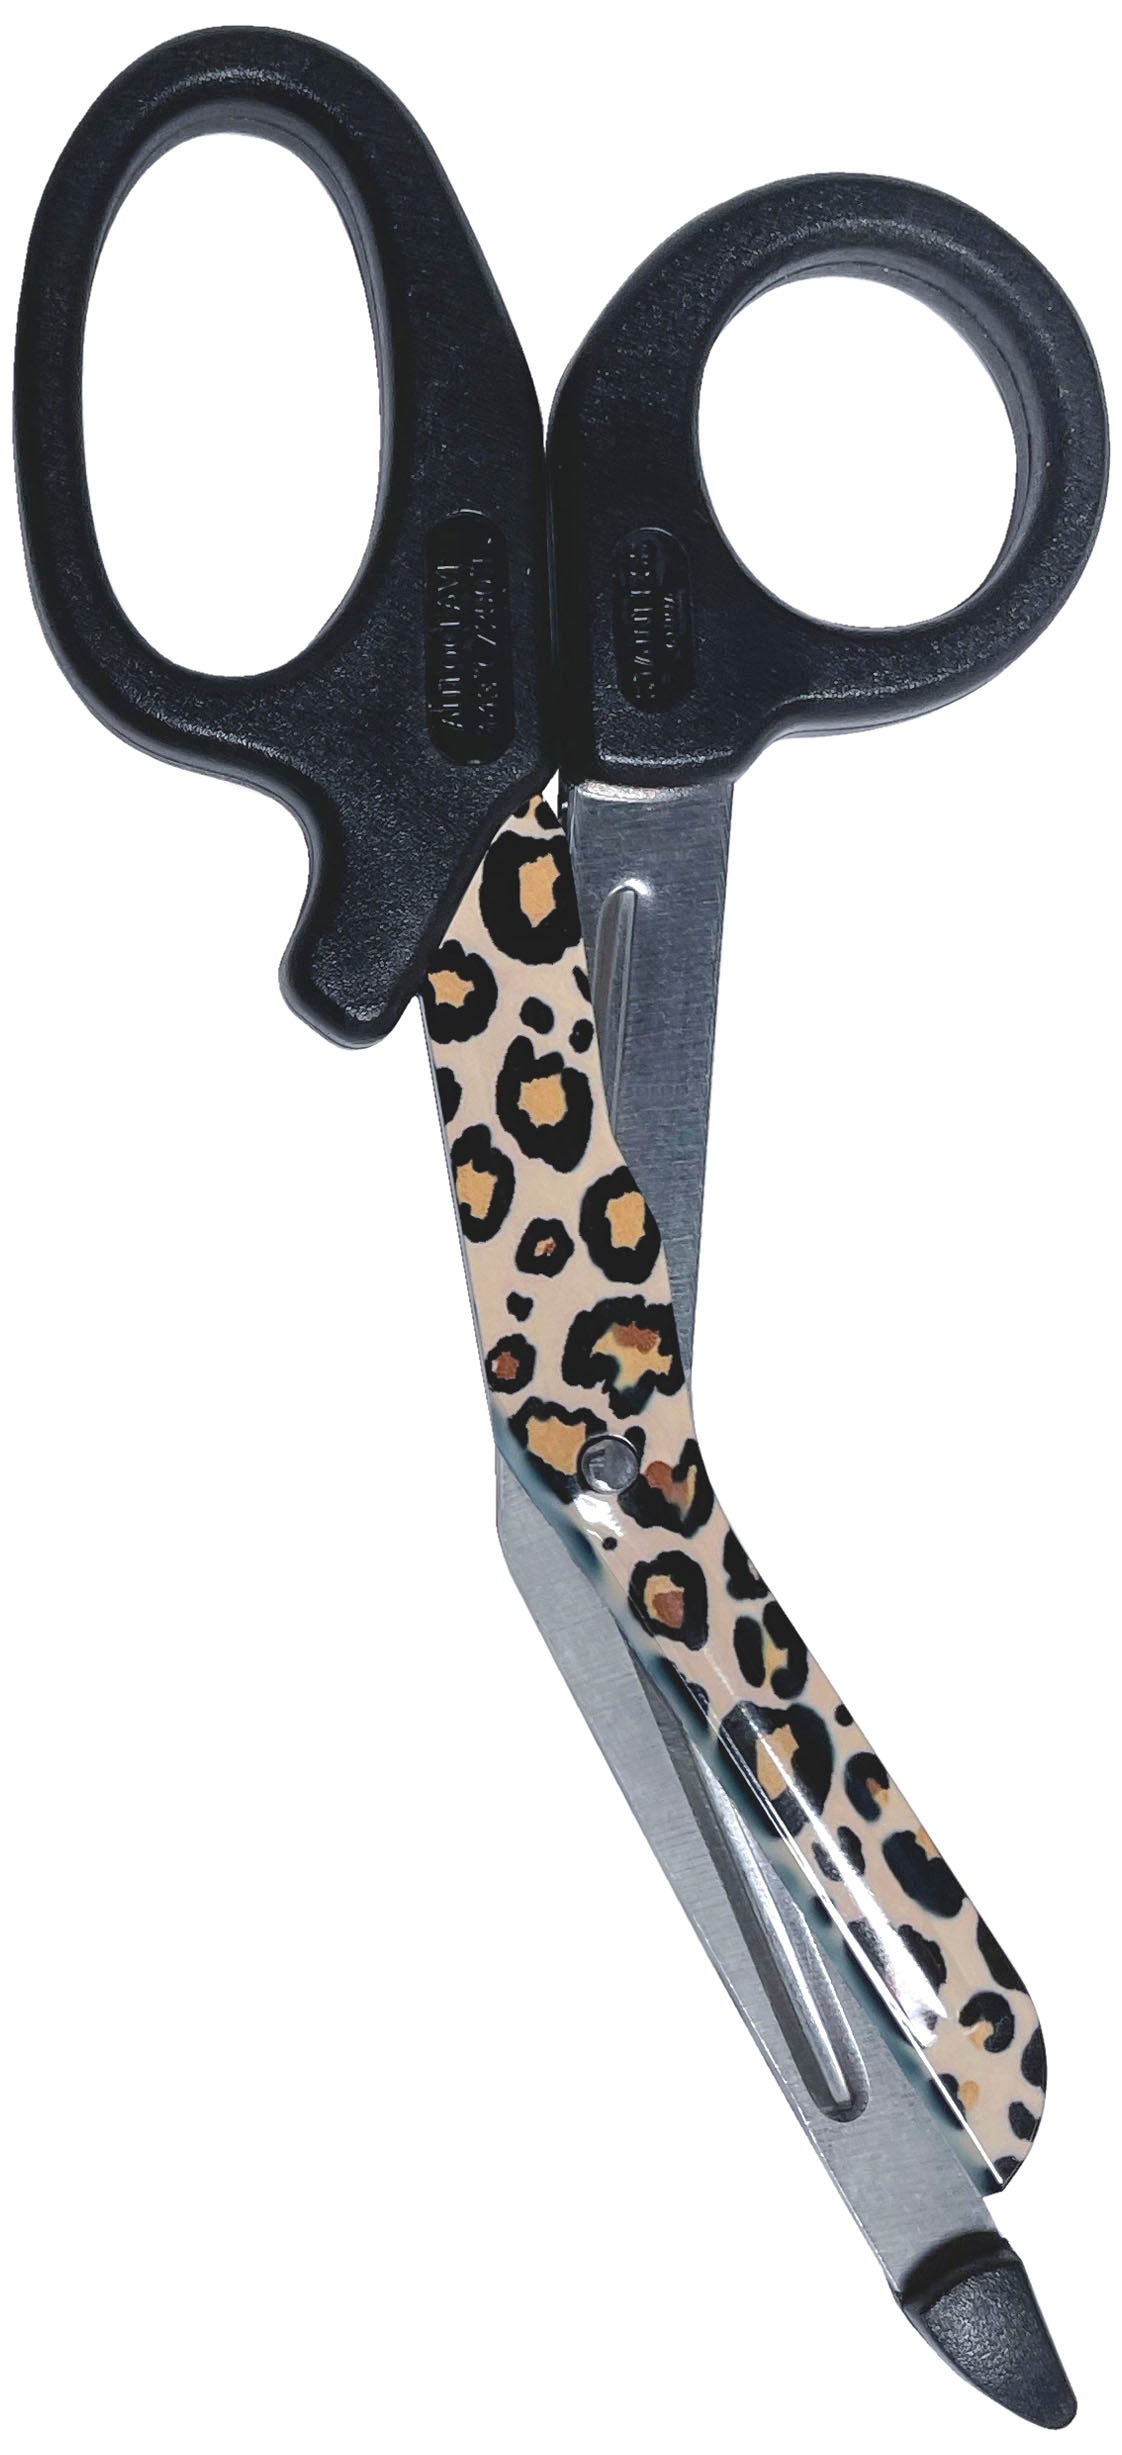 Shears 5 1/2" Bandage Scissors ADC Cheetah Chic  